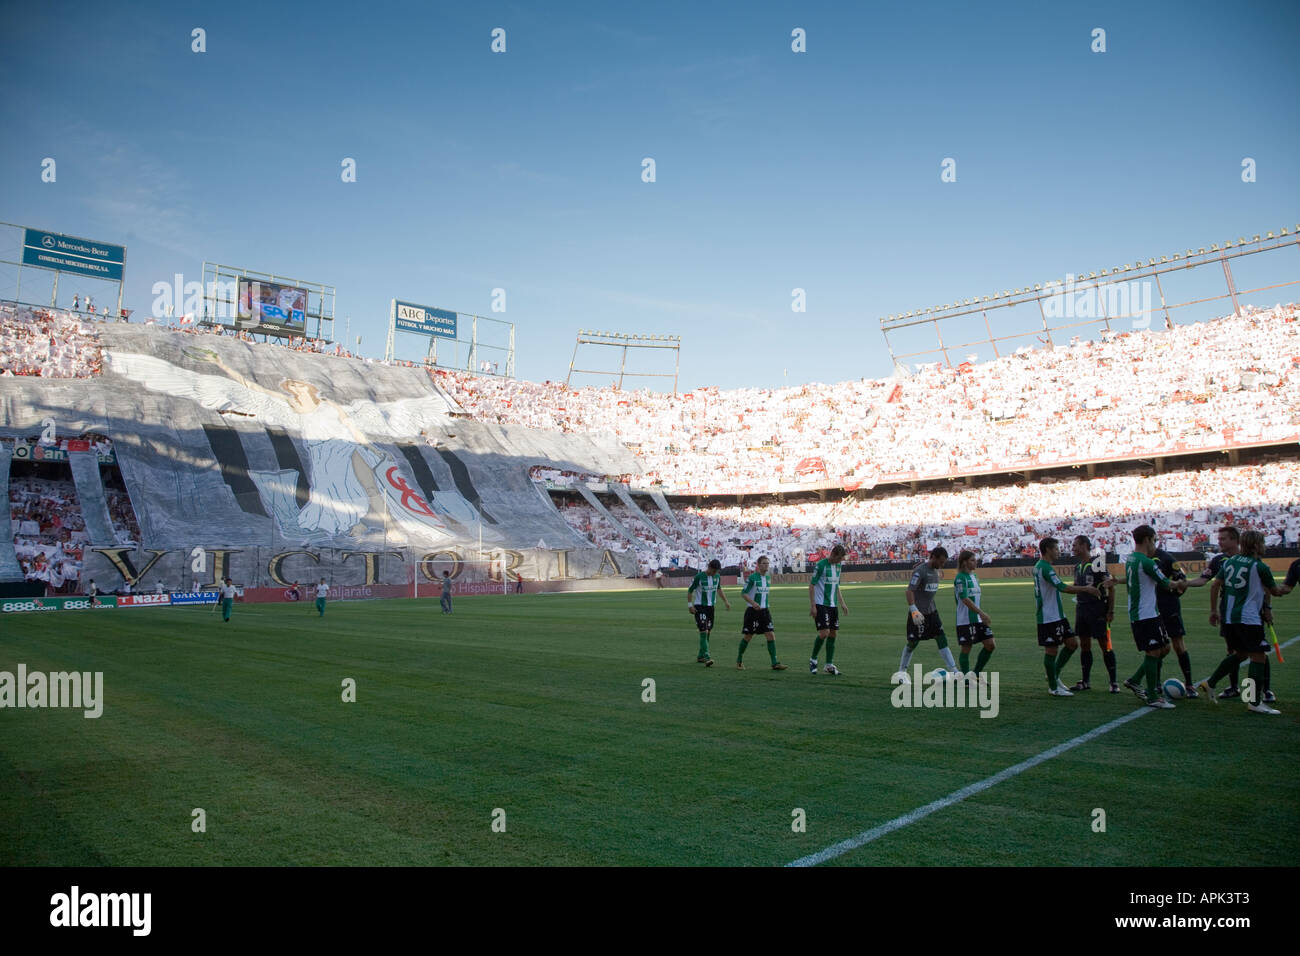 Tifo at Sanchez Pizjuan stadium, Seville, Spain Stock Photo